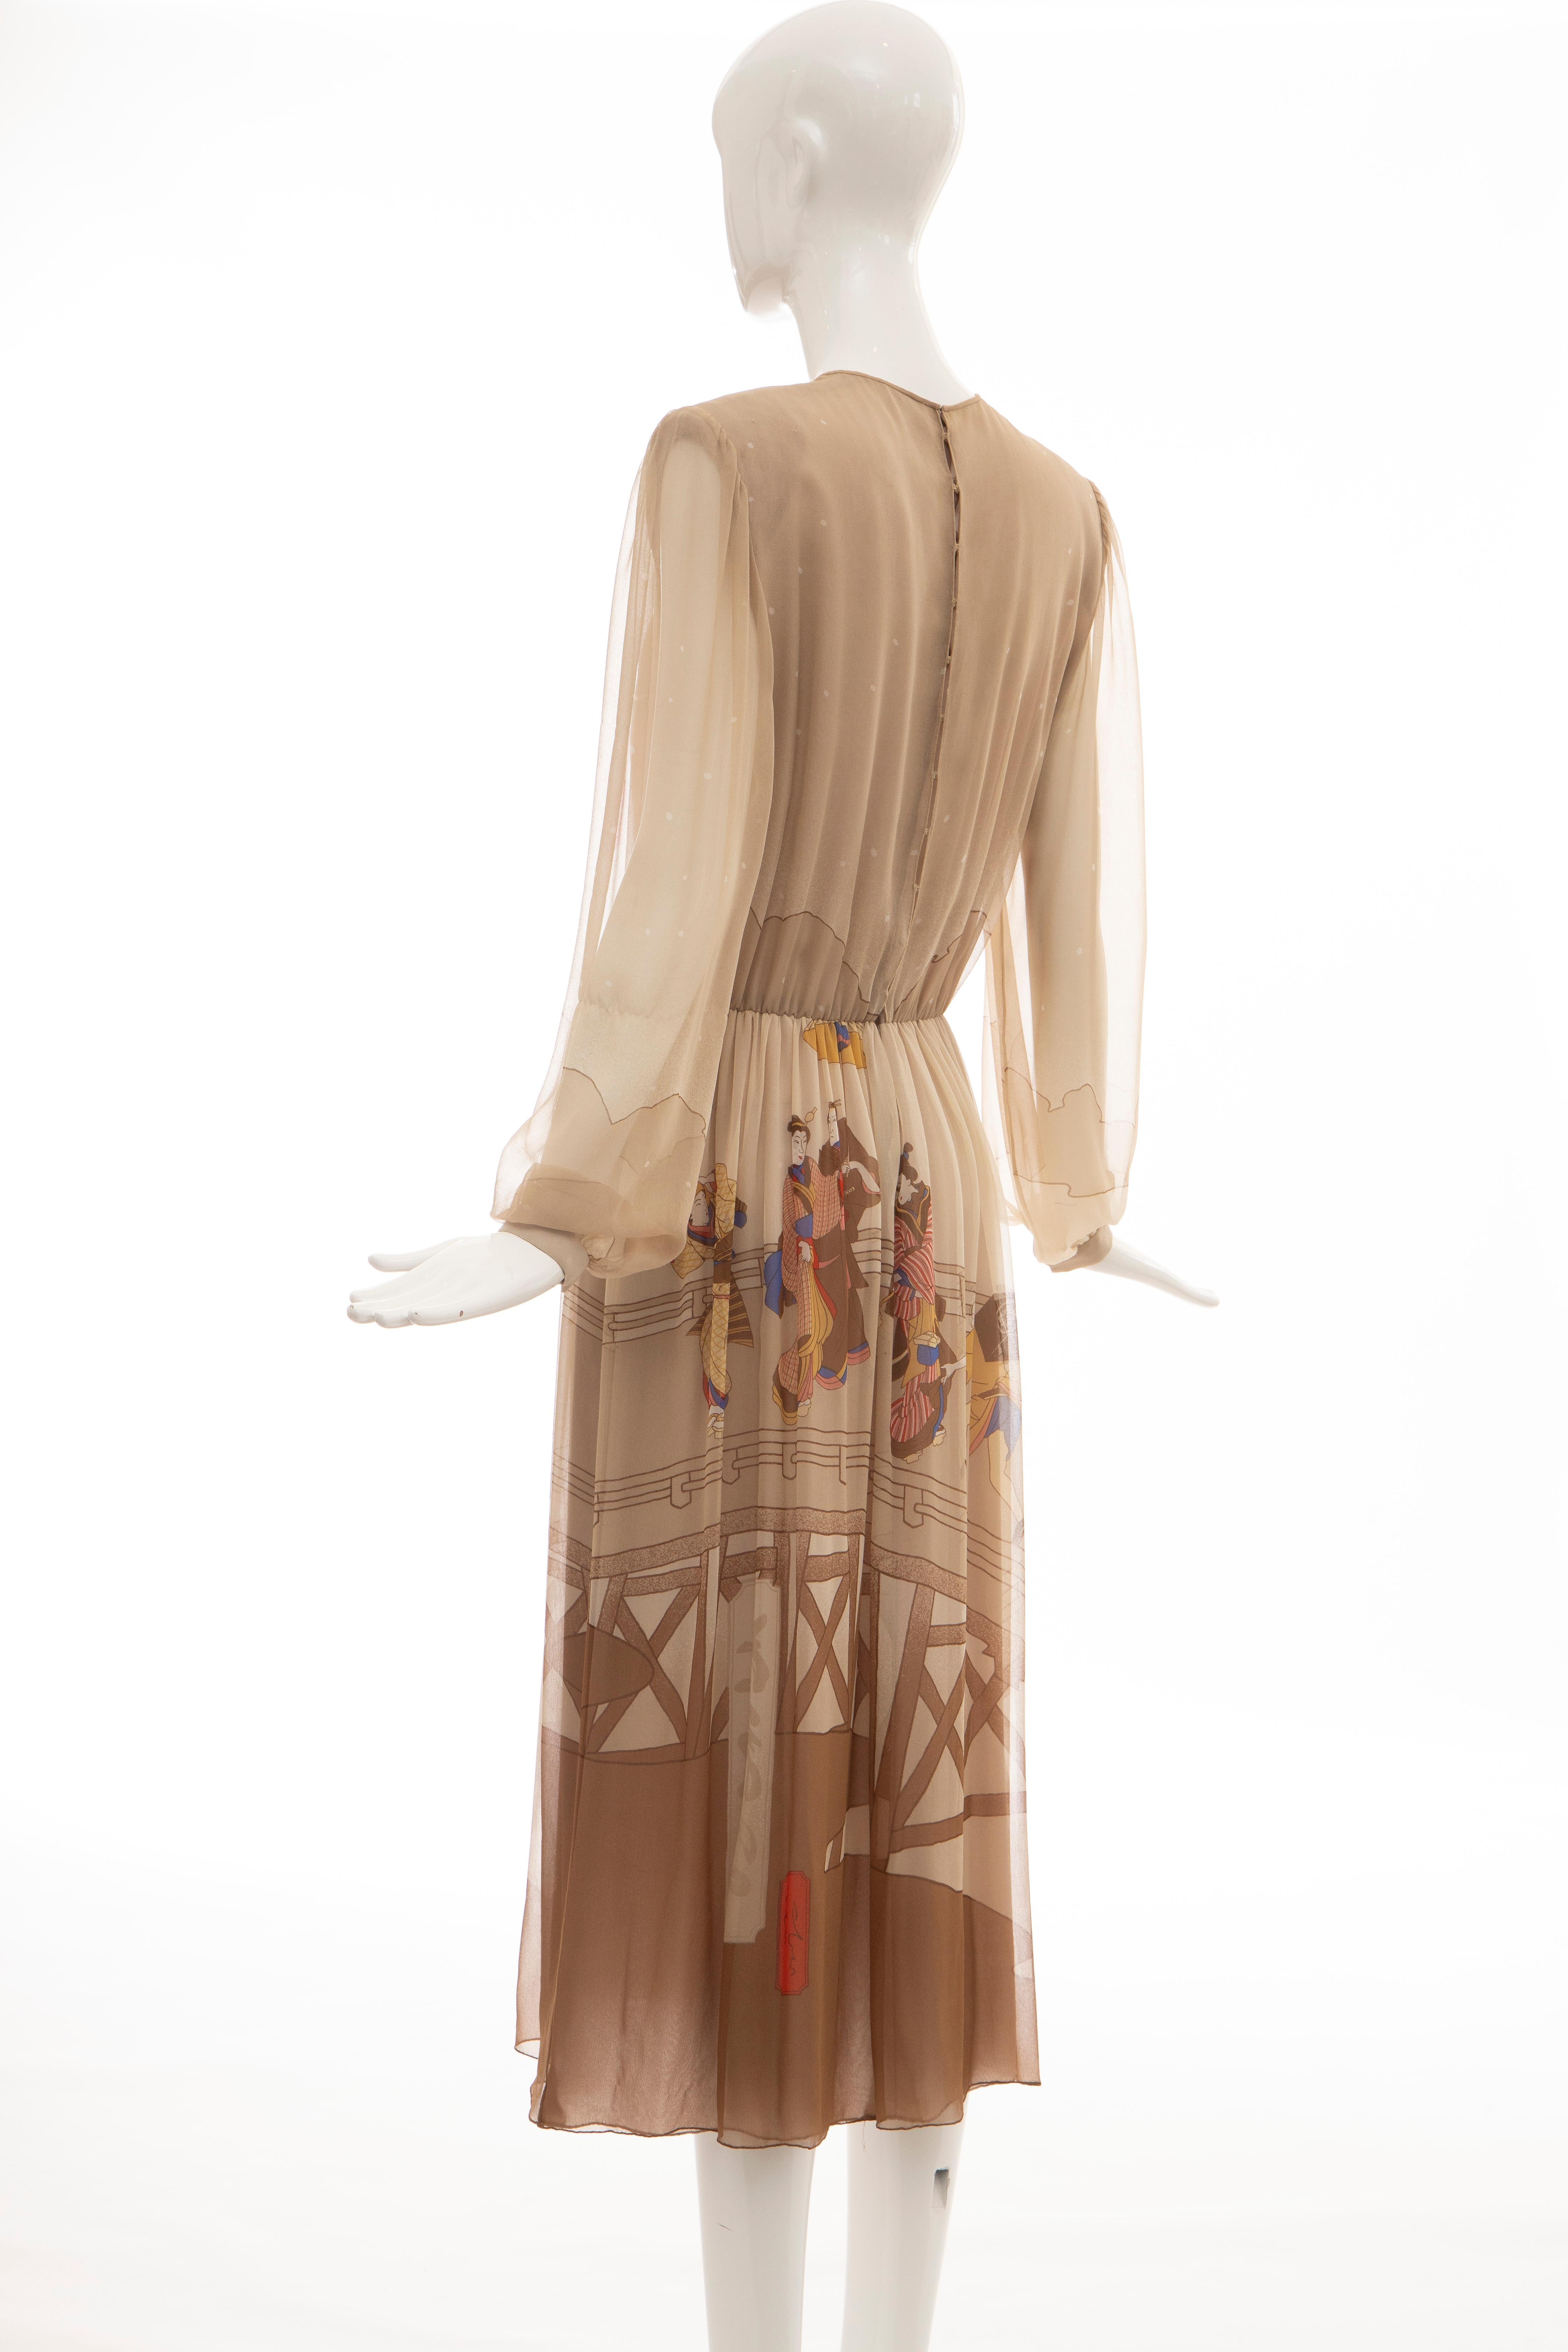 Hanae Mori Printed Geisha Silk Chiffon Dress, Circa: 1970's 5